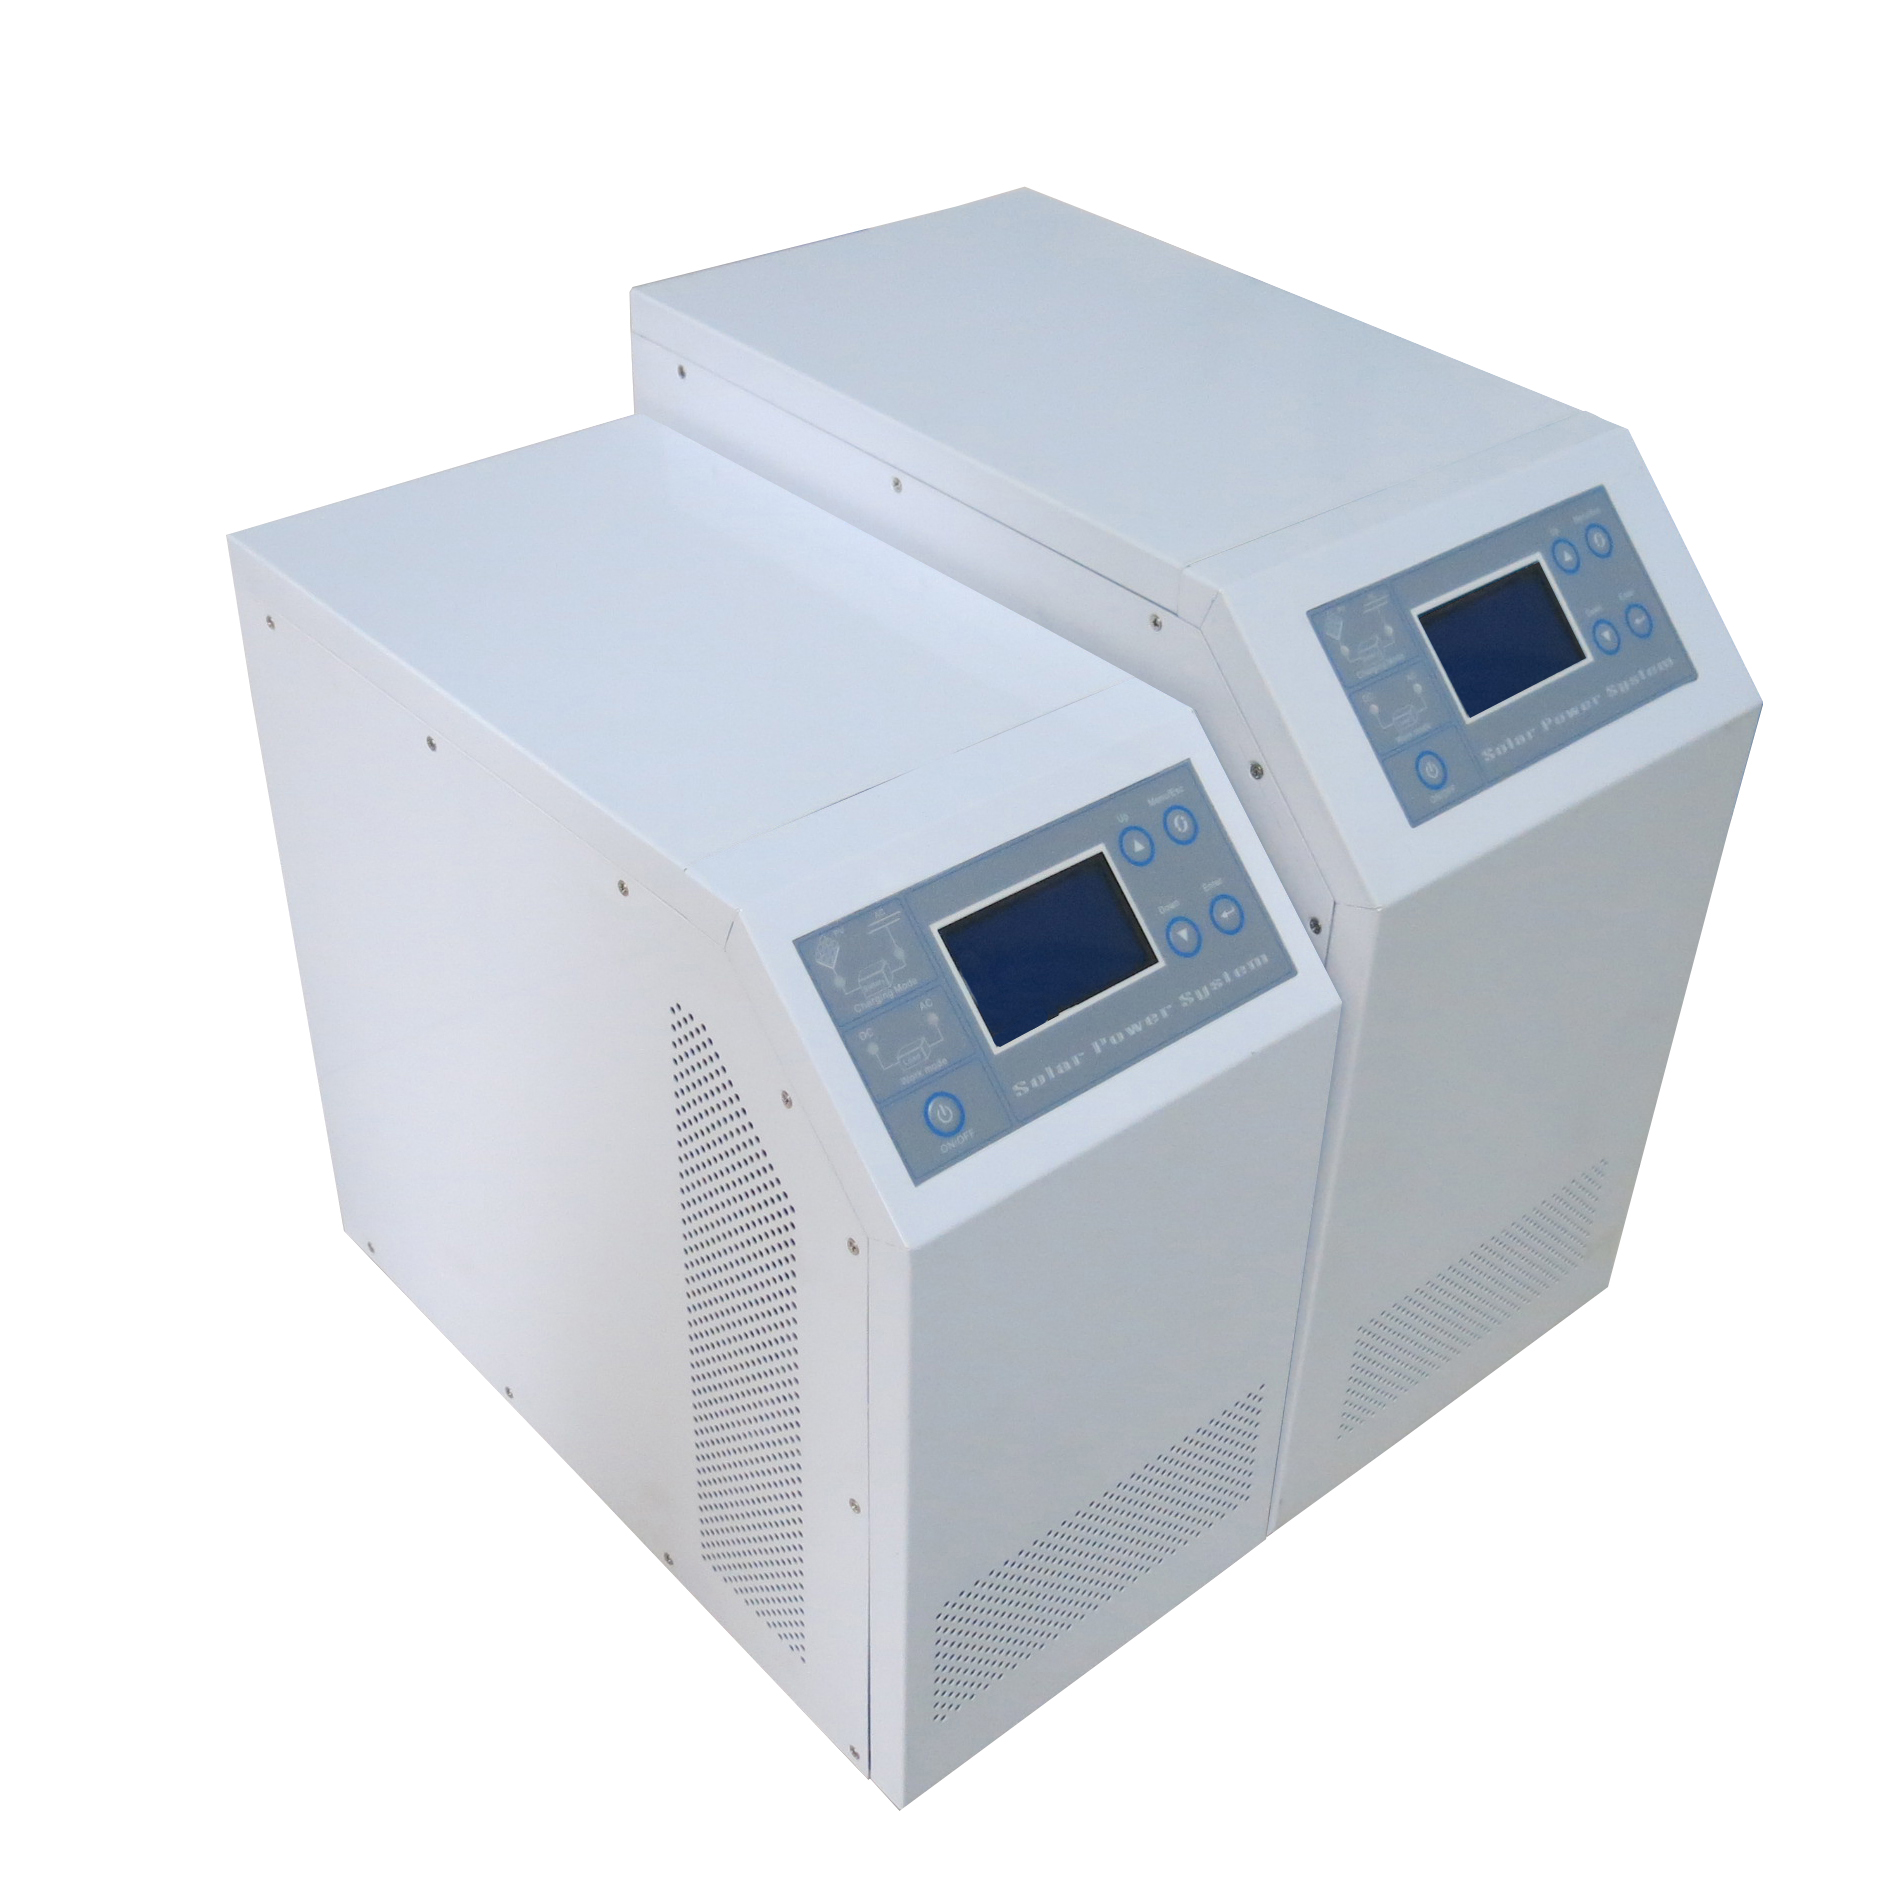 I-Panda HPC intelligente DC inverter AC costruito in MPPT regolatore solare 3000w 40A